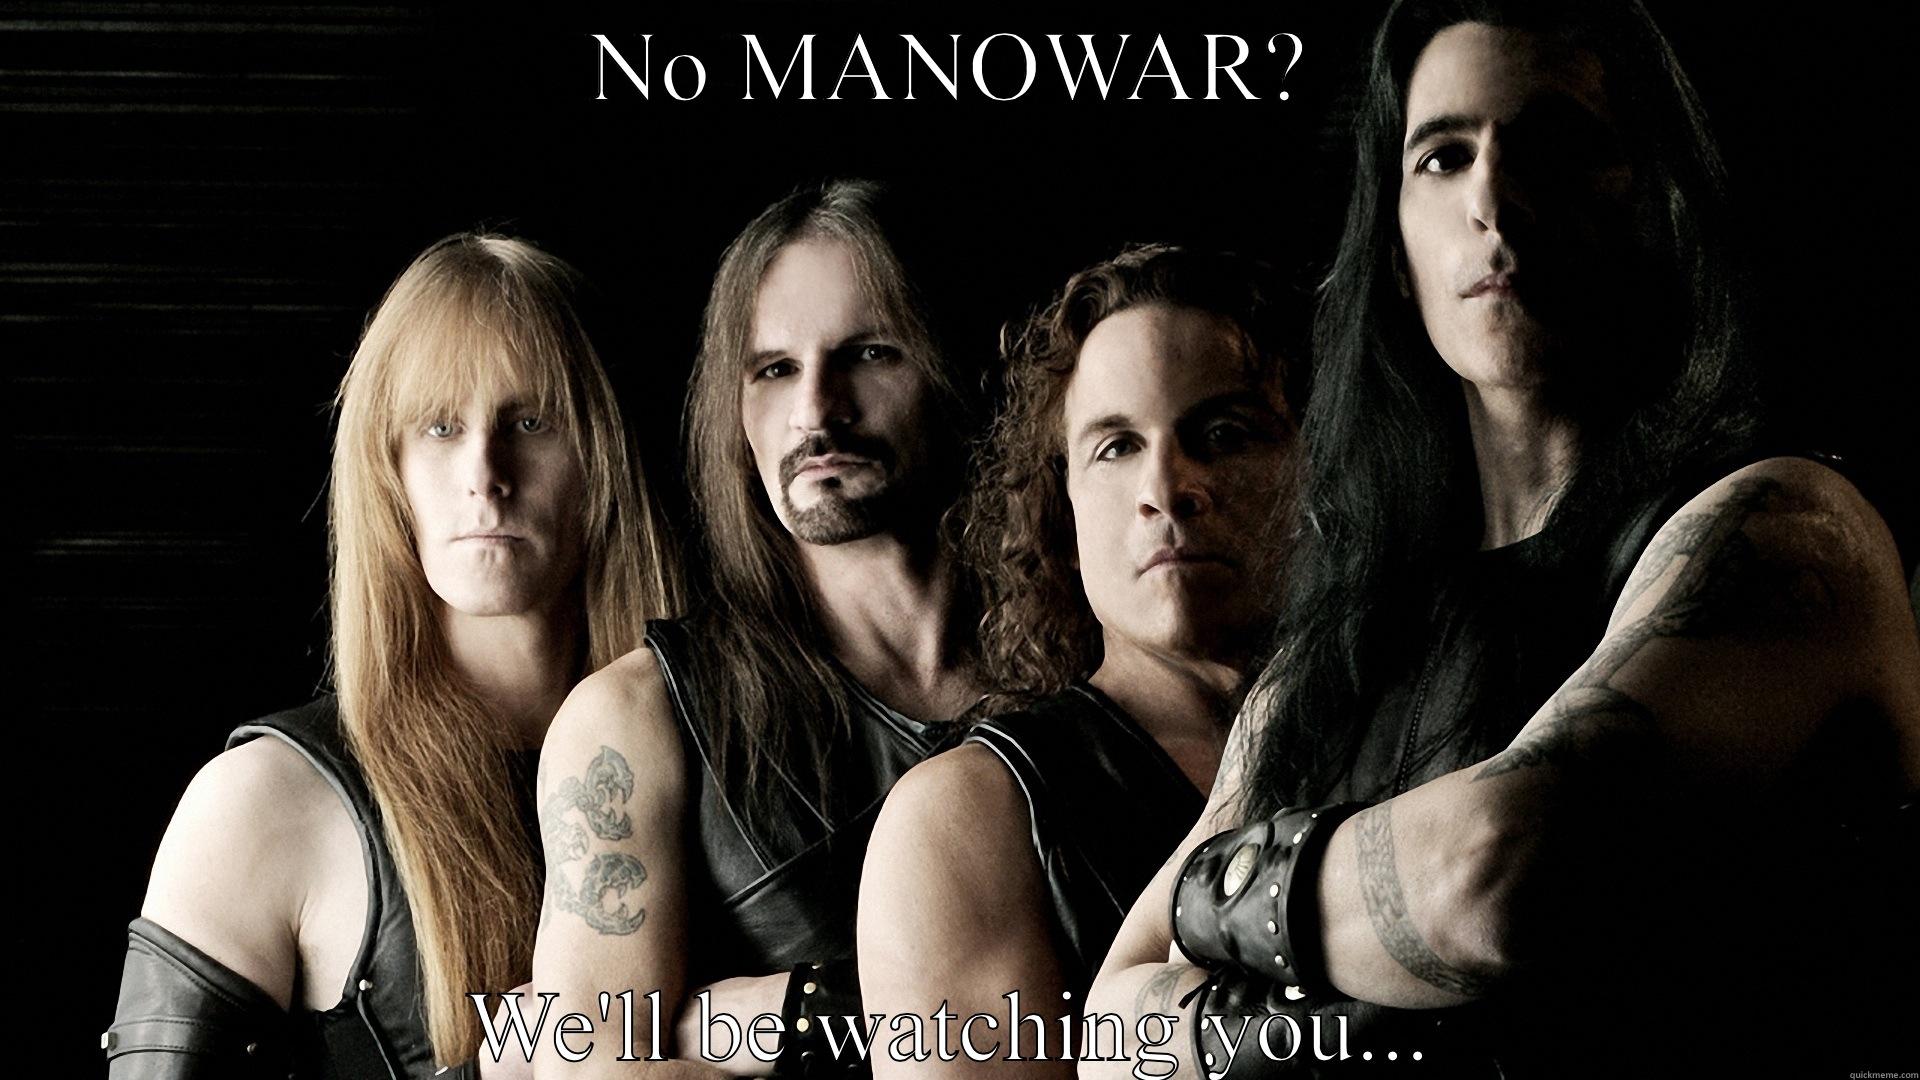 Manowar  - NO MANOWAR? WE'LL BE WATCHING YOU... Misc